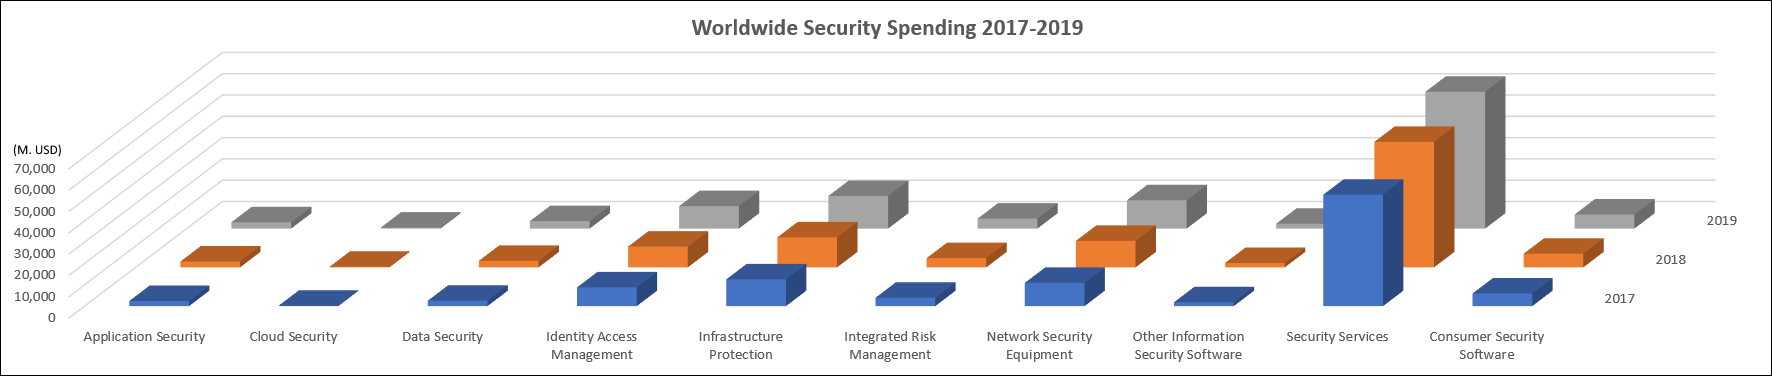 security spending